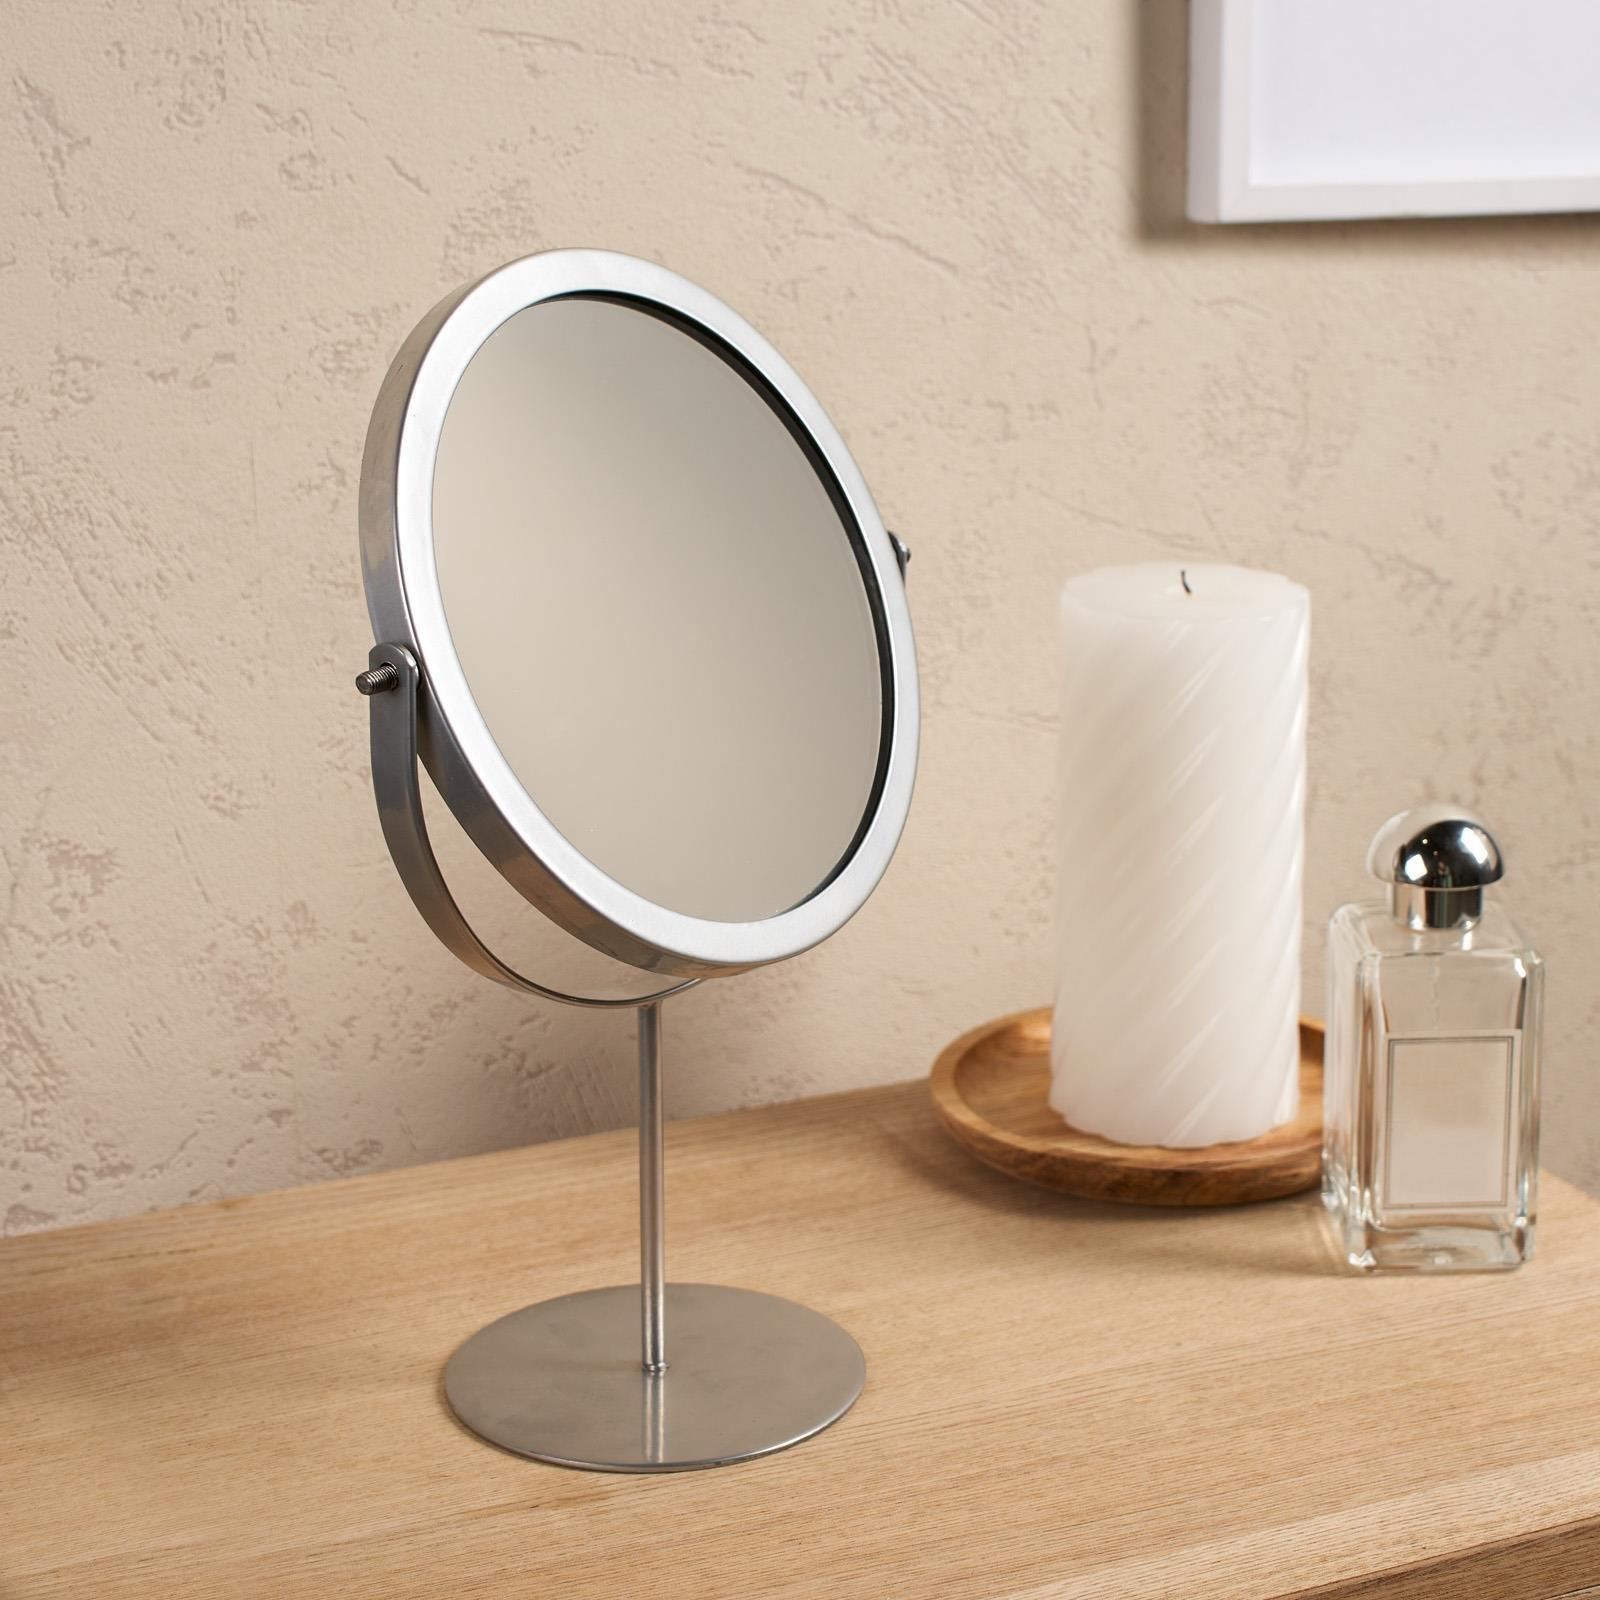 Round Bathroom Mirror Accessories Free Standing Vanity Stainless Steel Silver - image 1